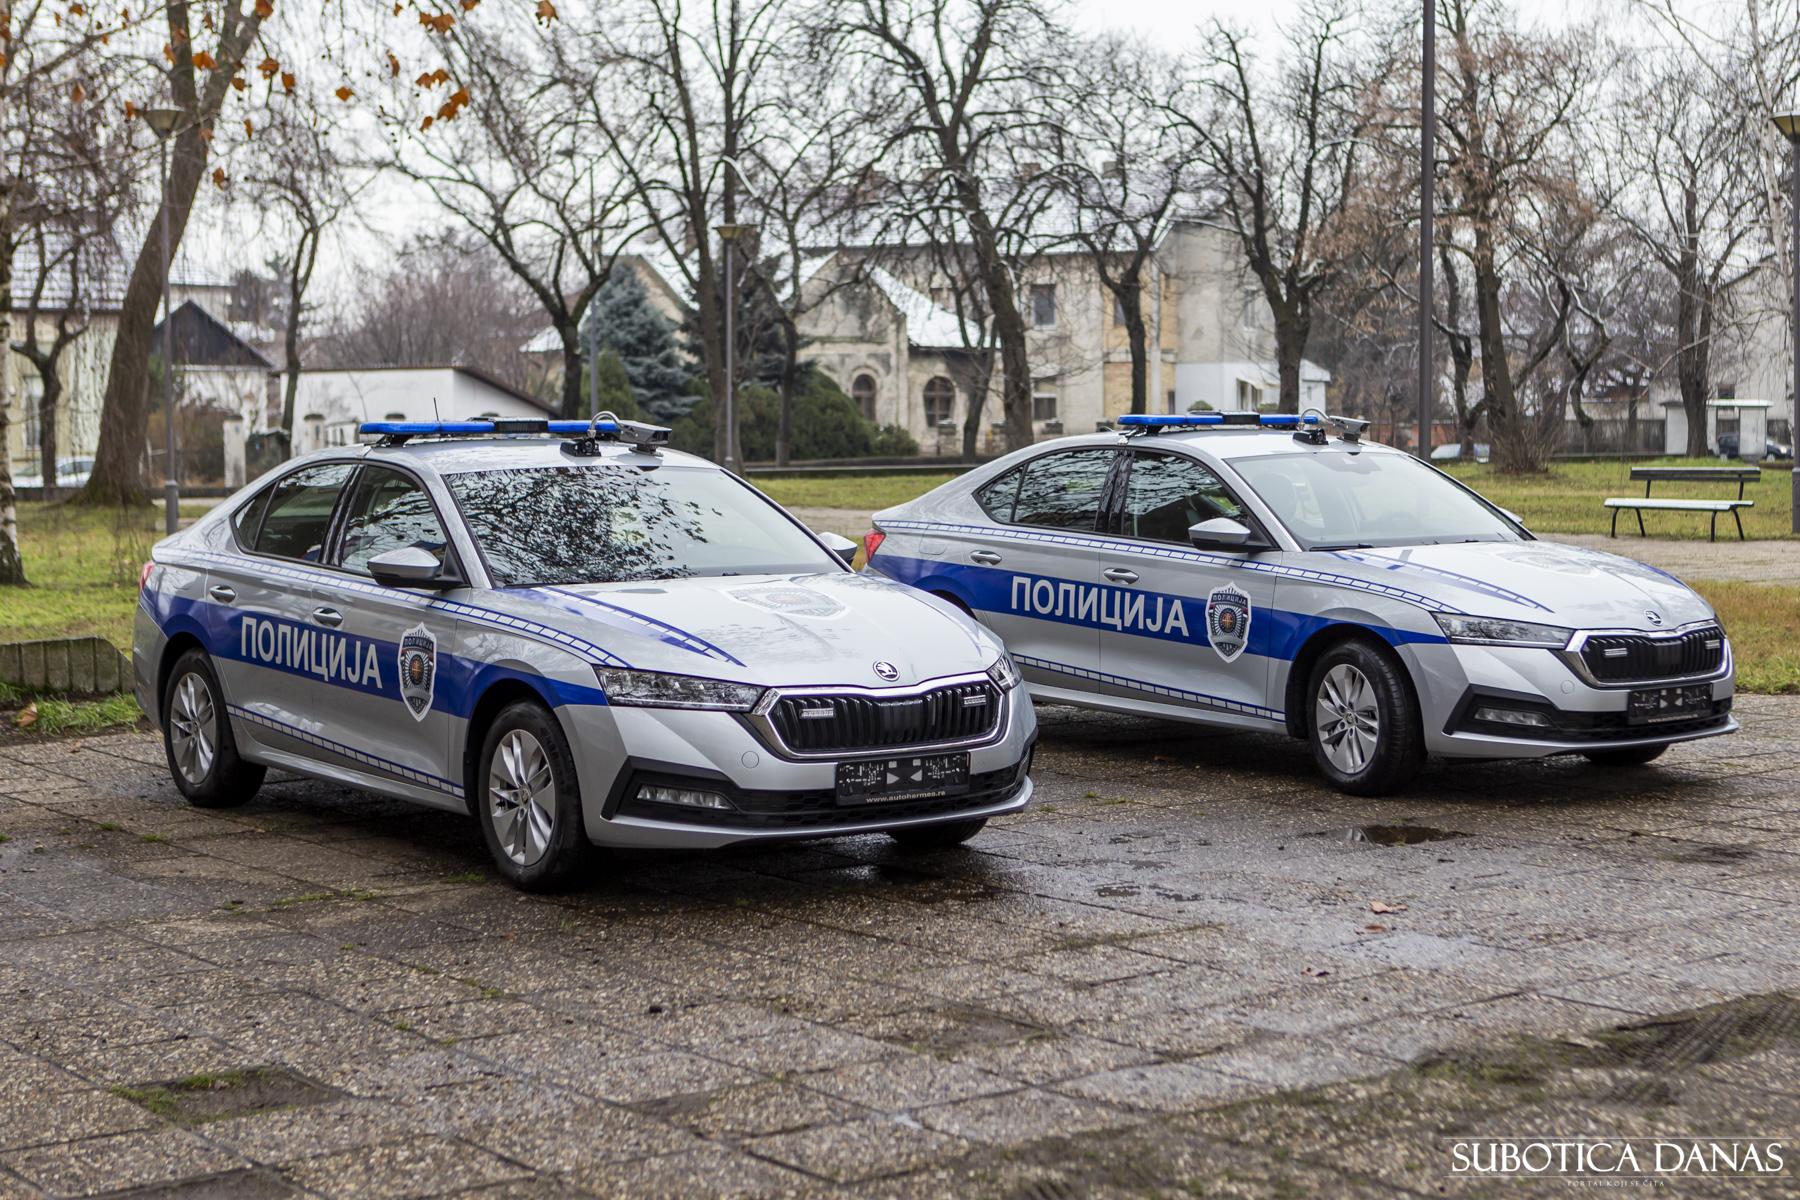 Policijska uprava od Grada dobila dva nova vozila